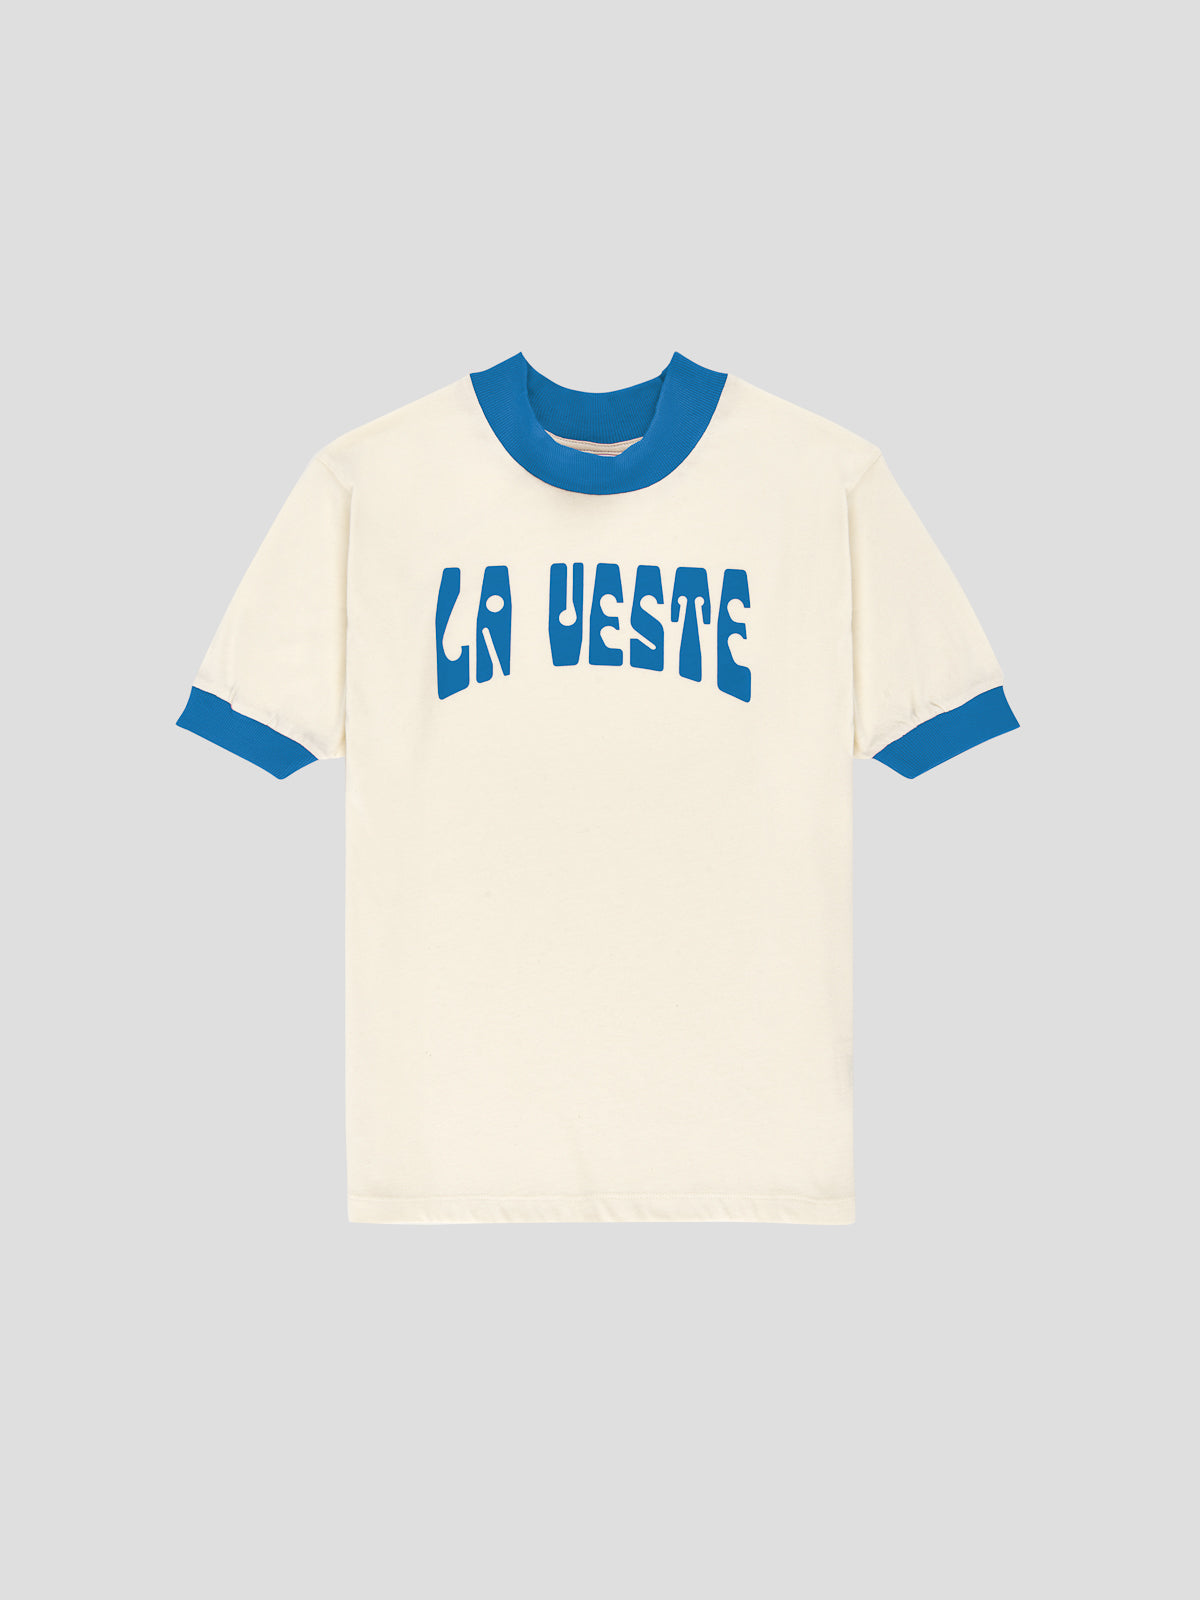 T-shirt in white cotton with LA VESTE logo in blue